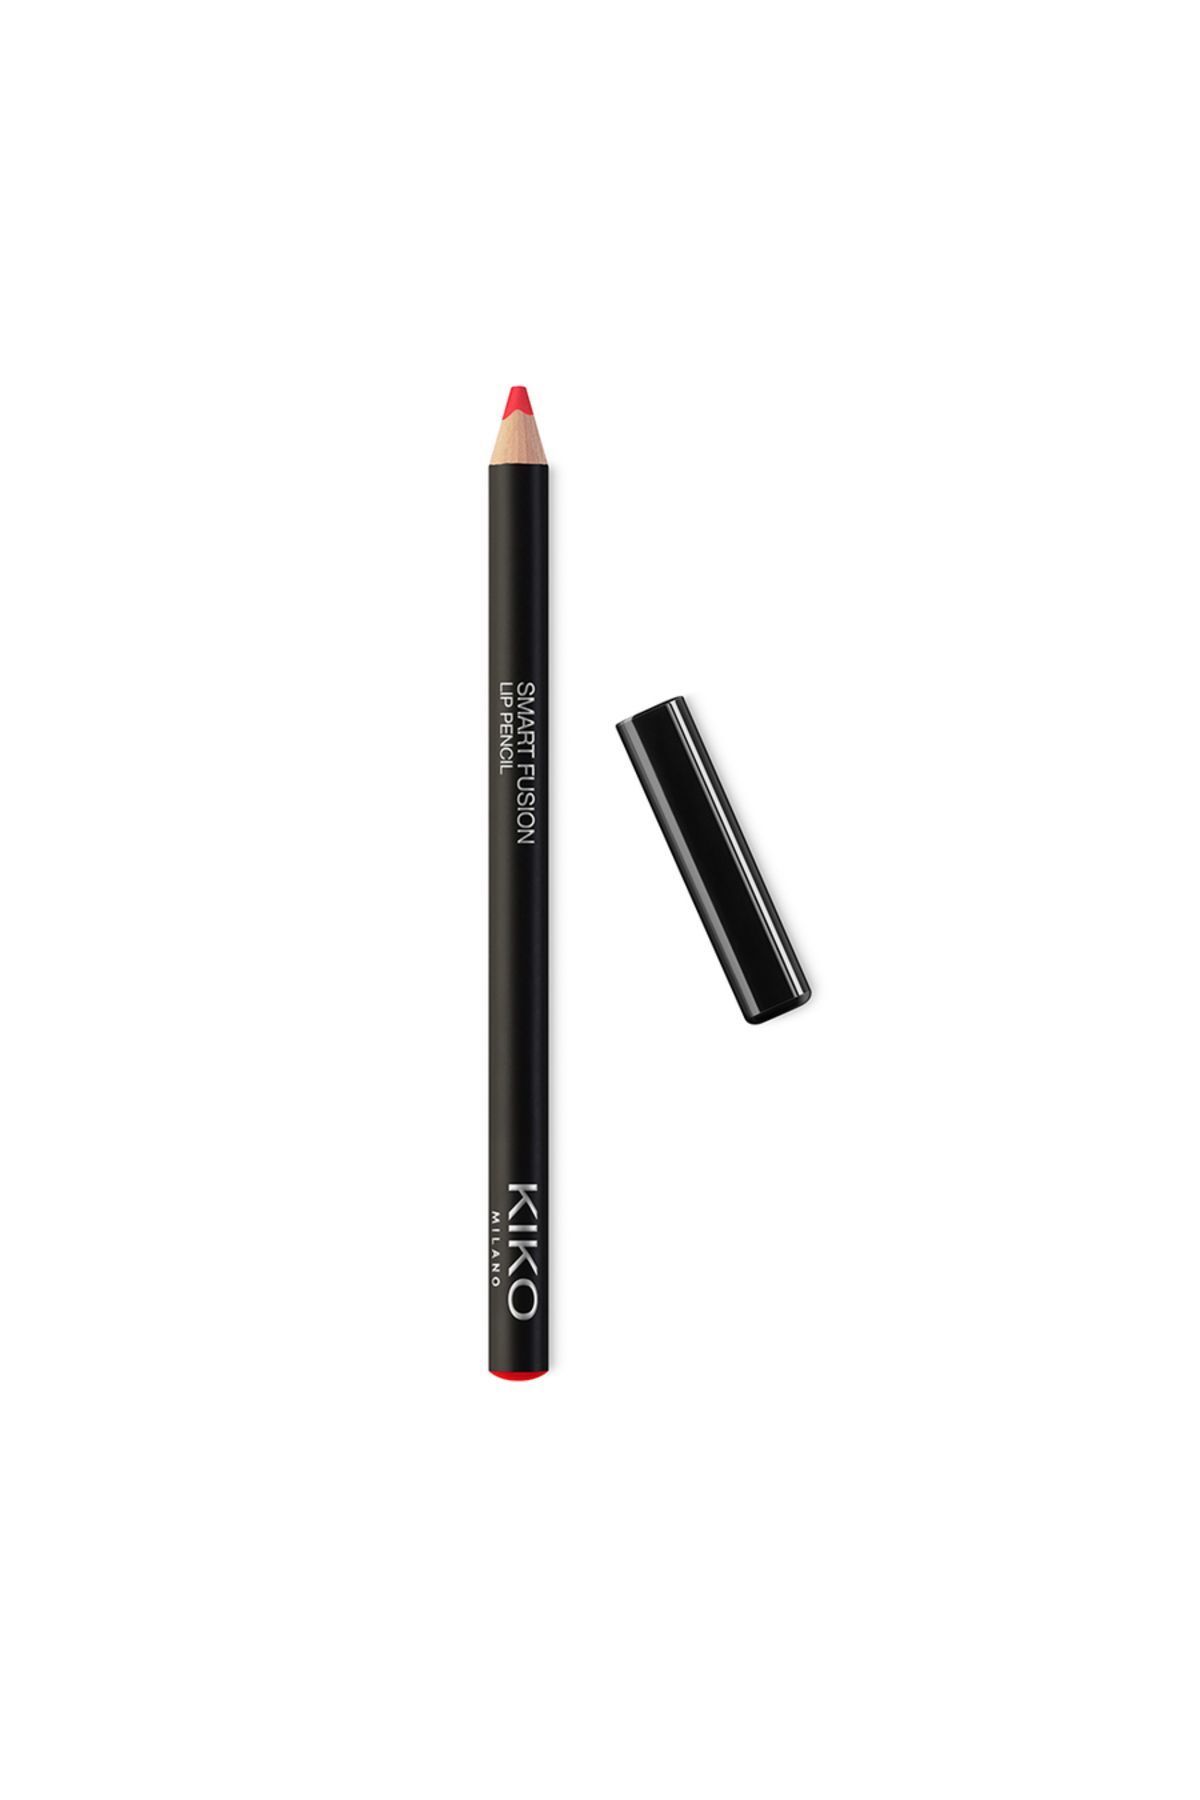 KIKO DUDAK KALEMİ - Smart Fusion Lip Pencil - 530 Amaranth